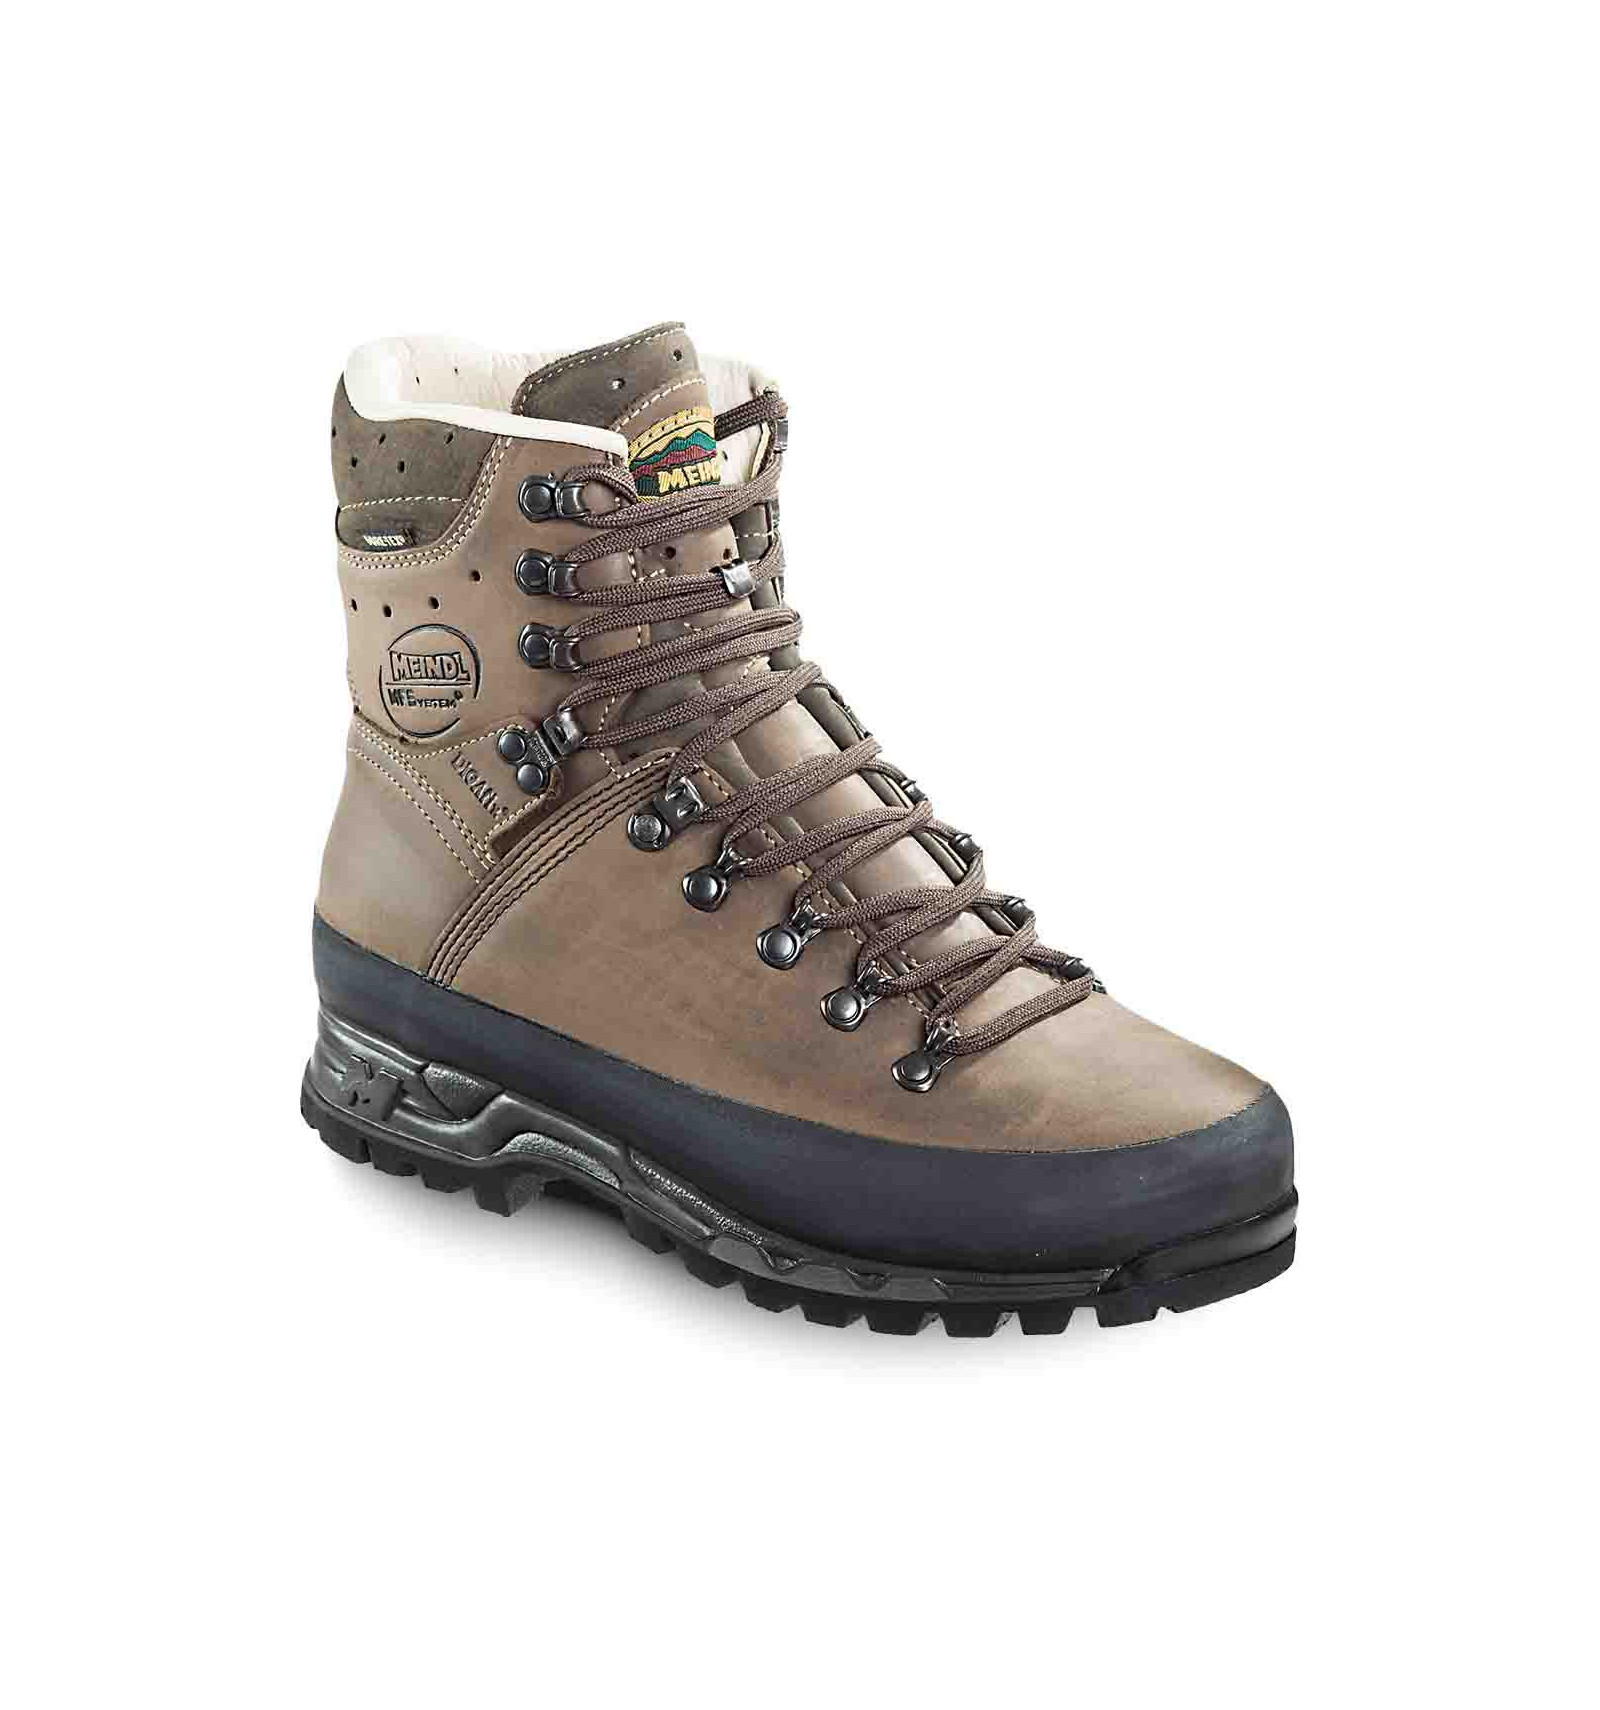 Mejores botas de montaña baratas para comprar online con envío gratis # trekking #senderismo